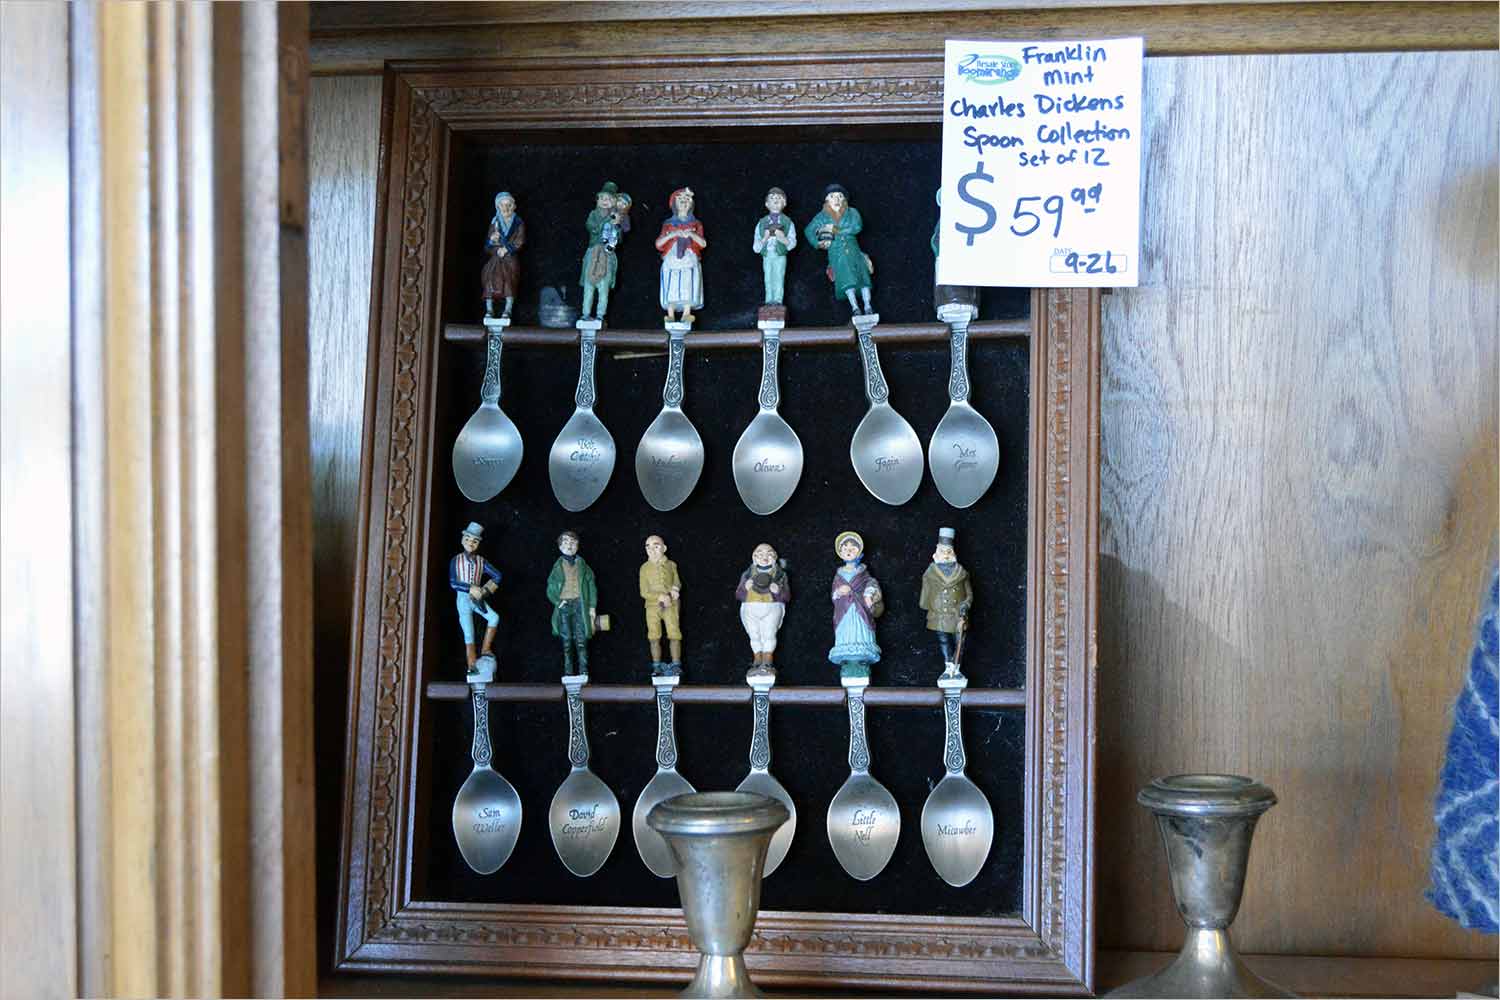 Dickens spoons